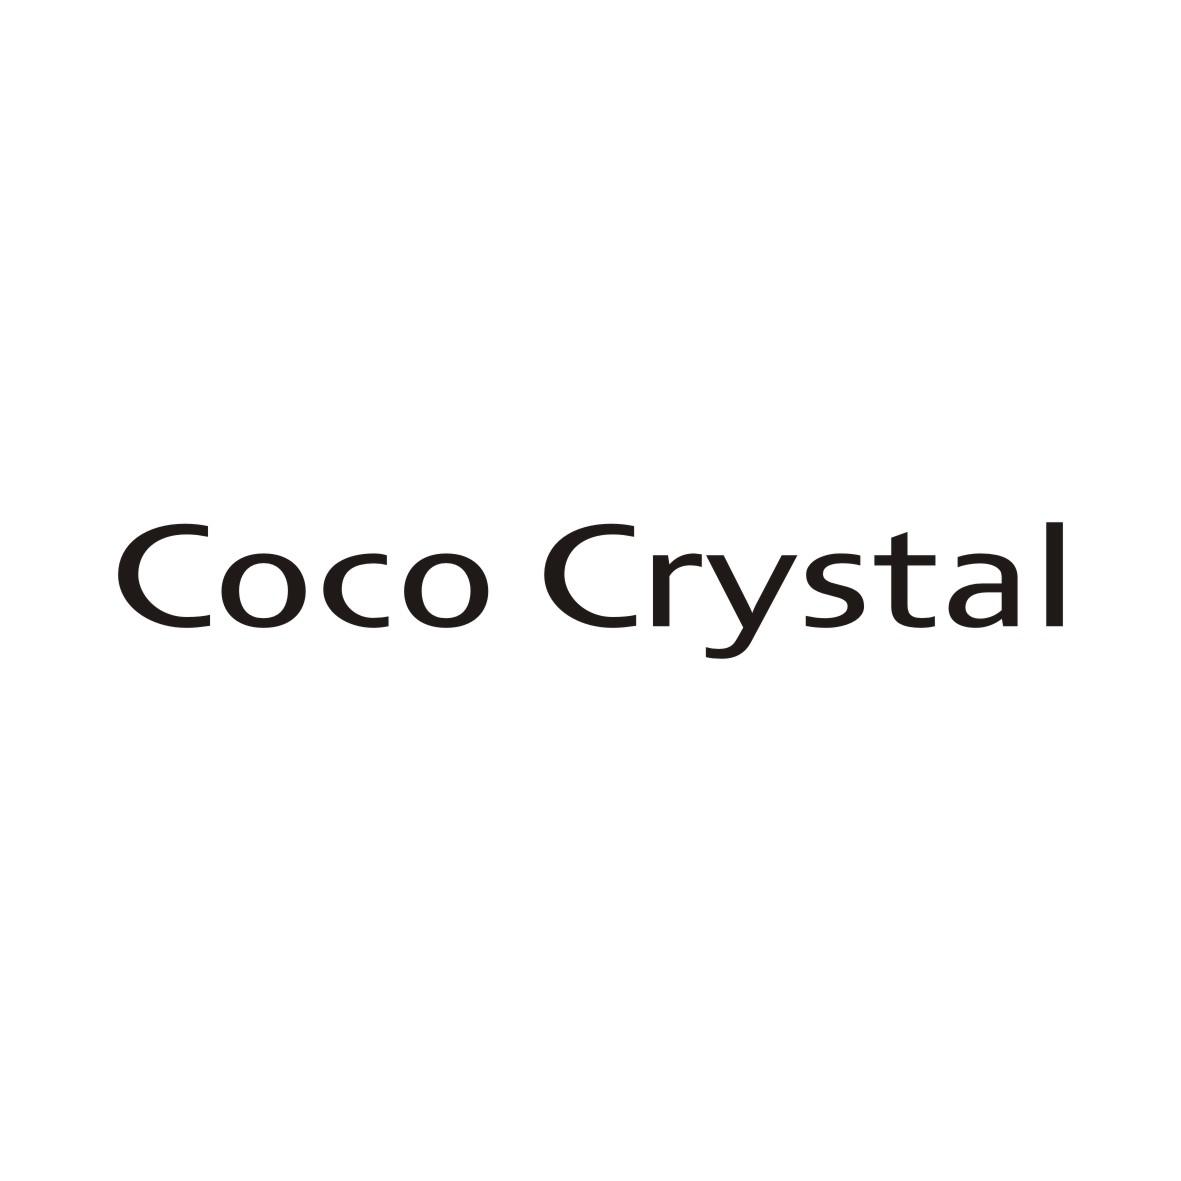 COCO CRYSTAL商标转让